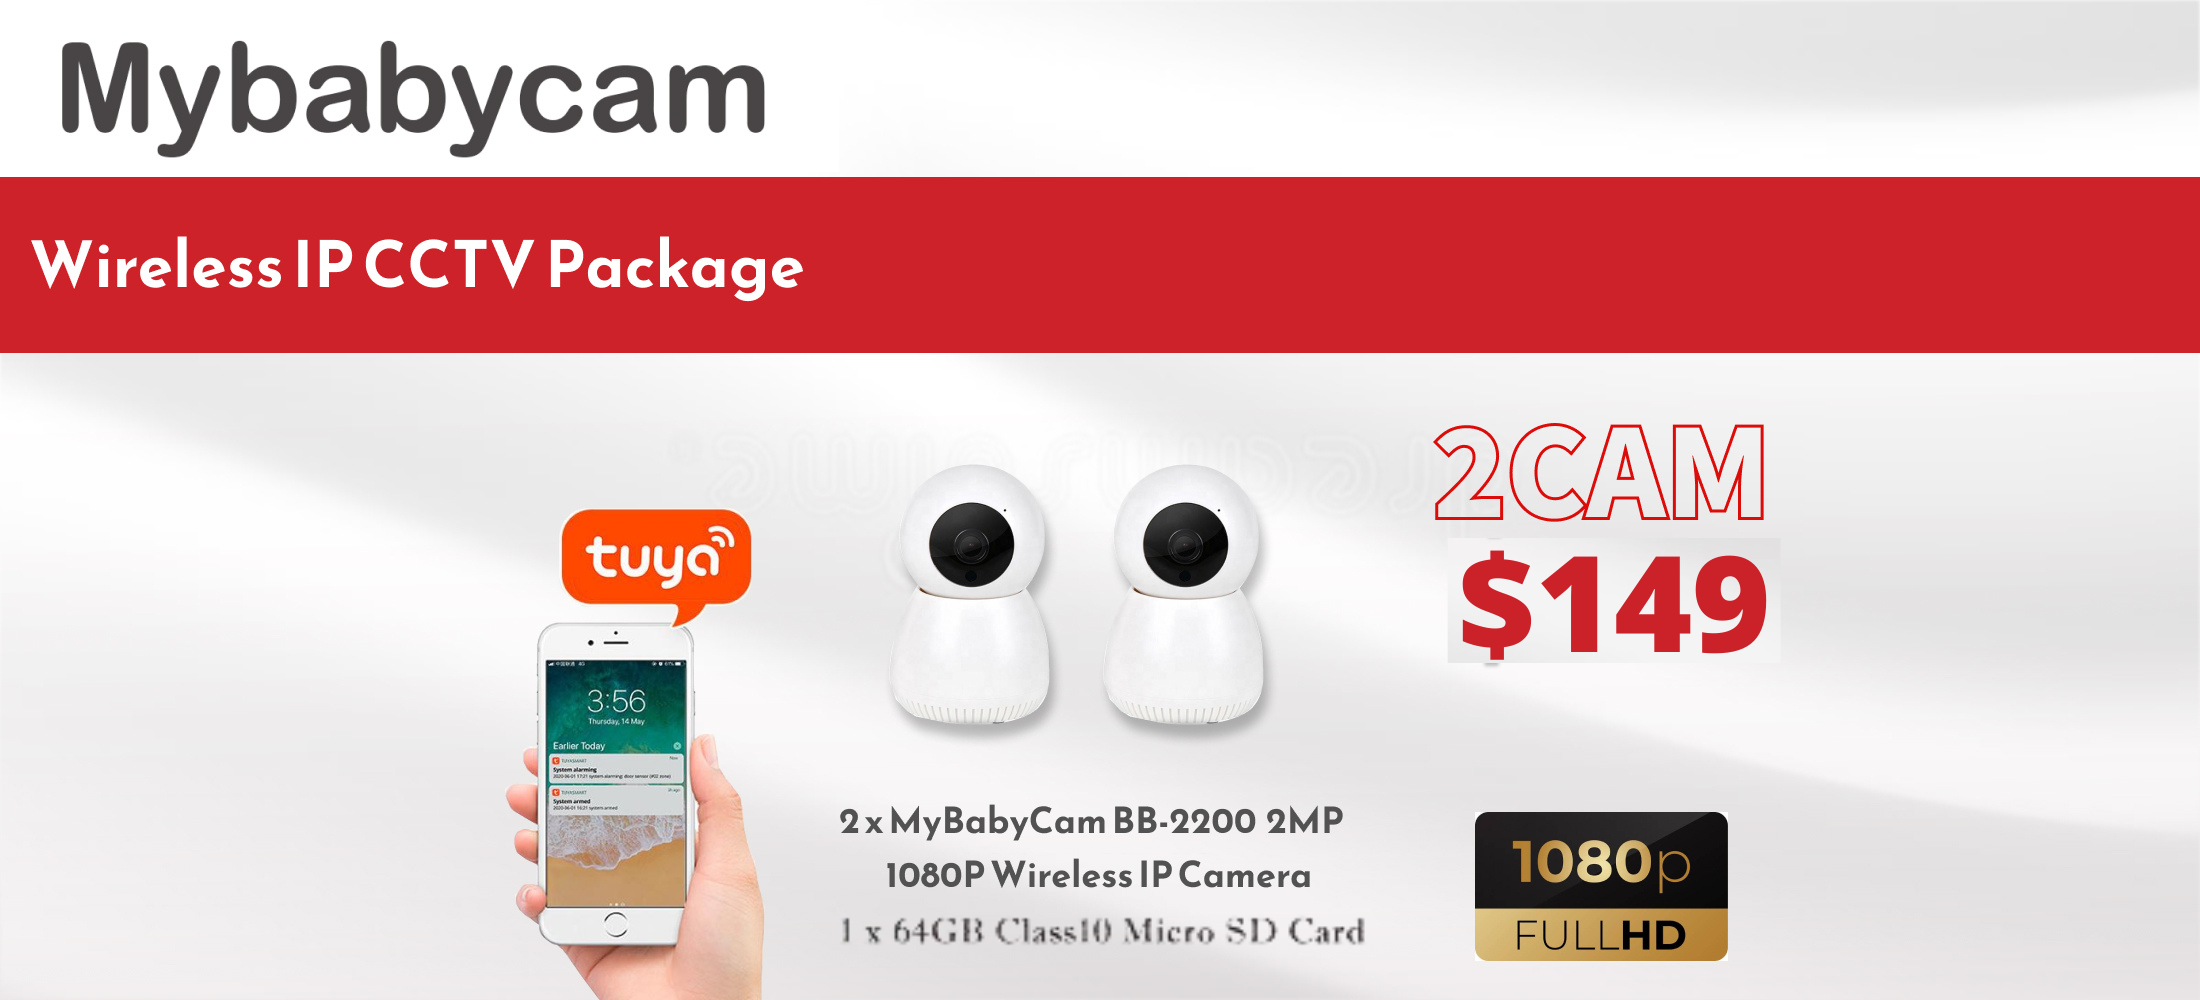 2 CAM Mybabycam Wireless IP CCTV Package  $149.00